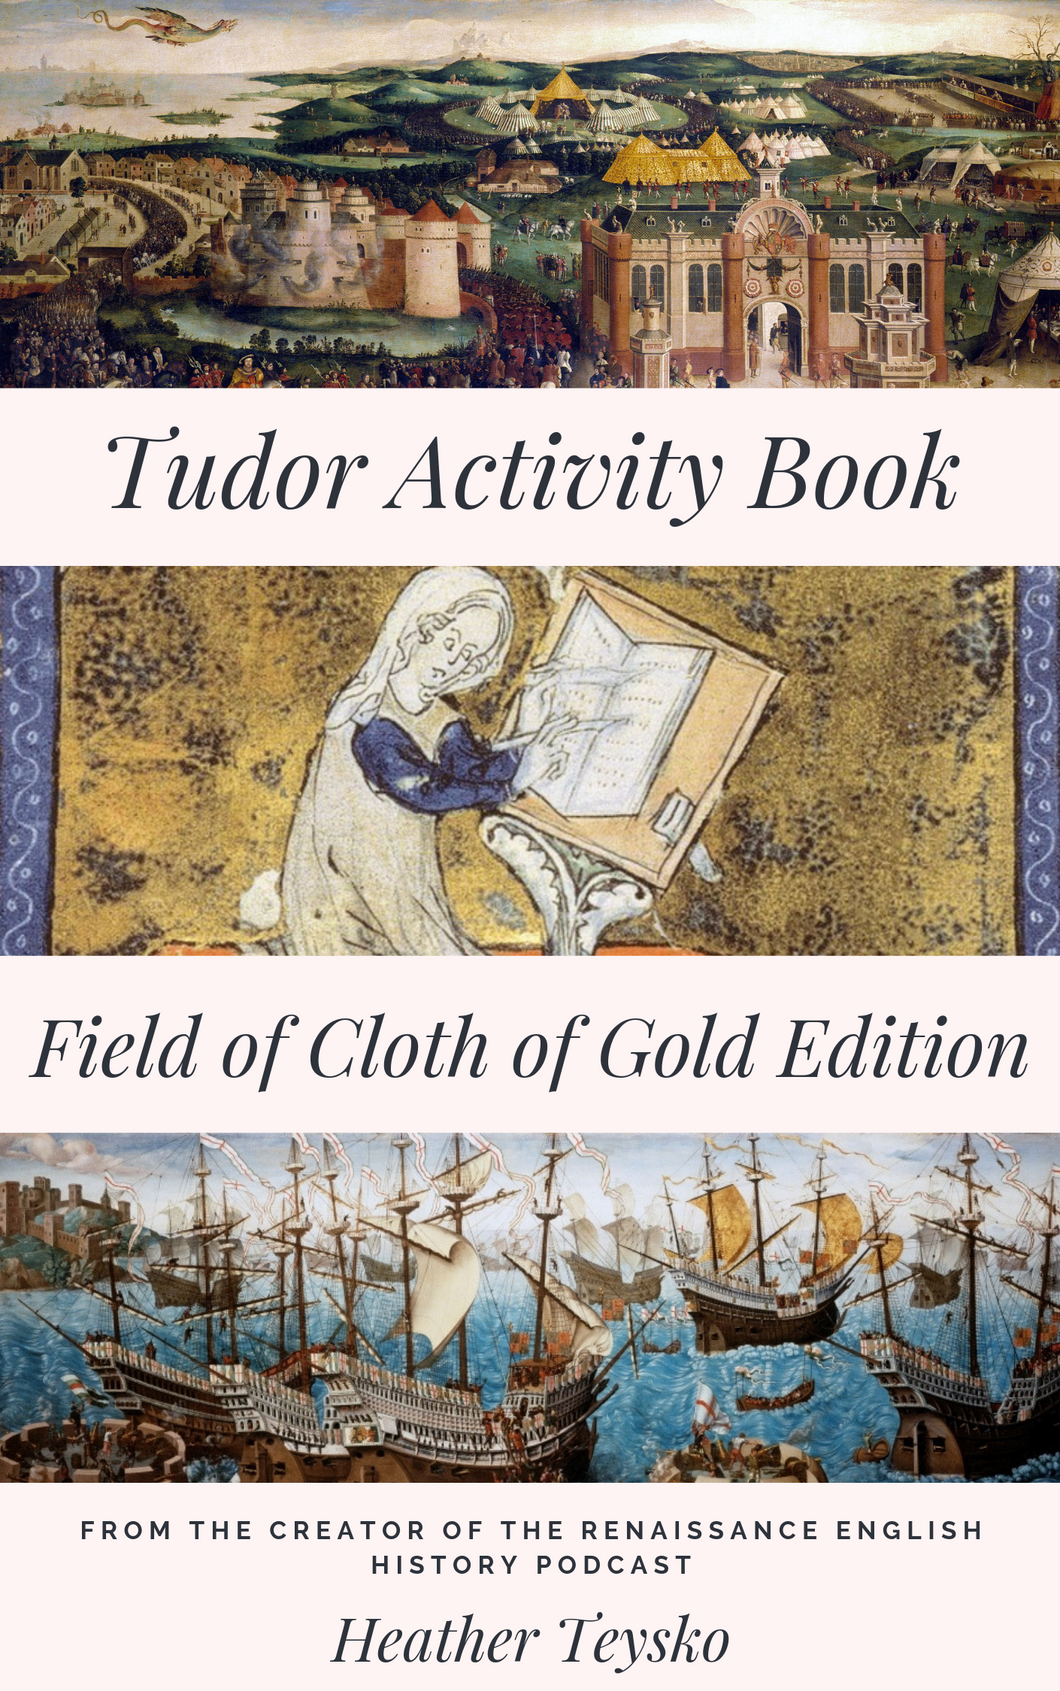 Tudor Activity Book: Field of Cloth of Gold Edition DIGITAL EDITION